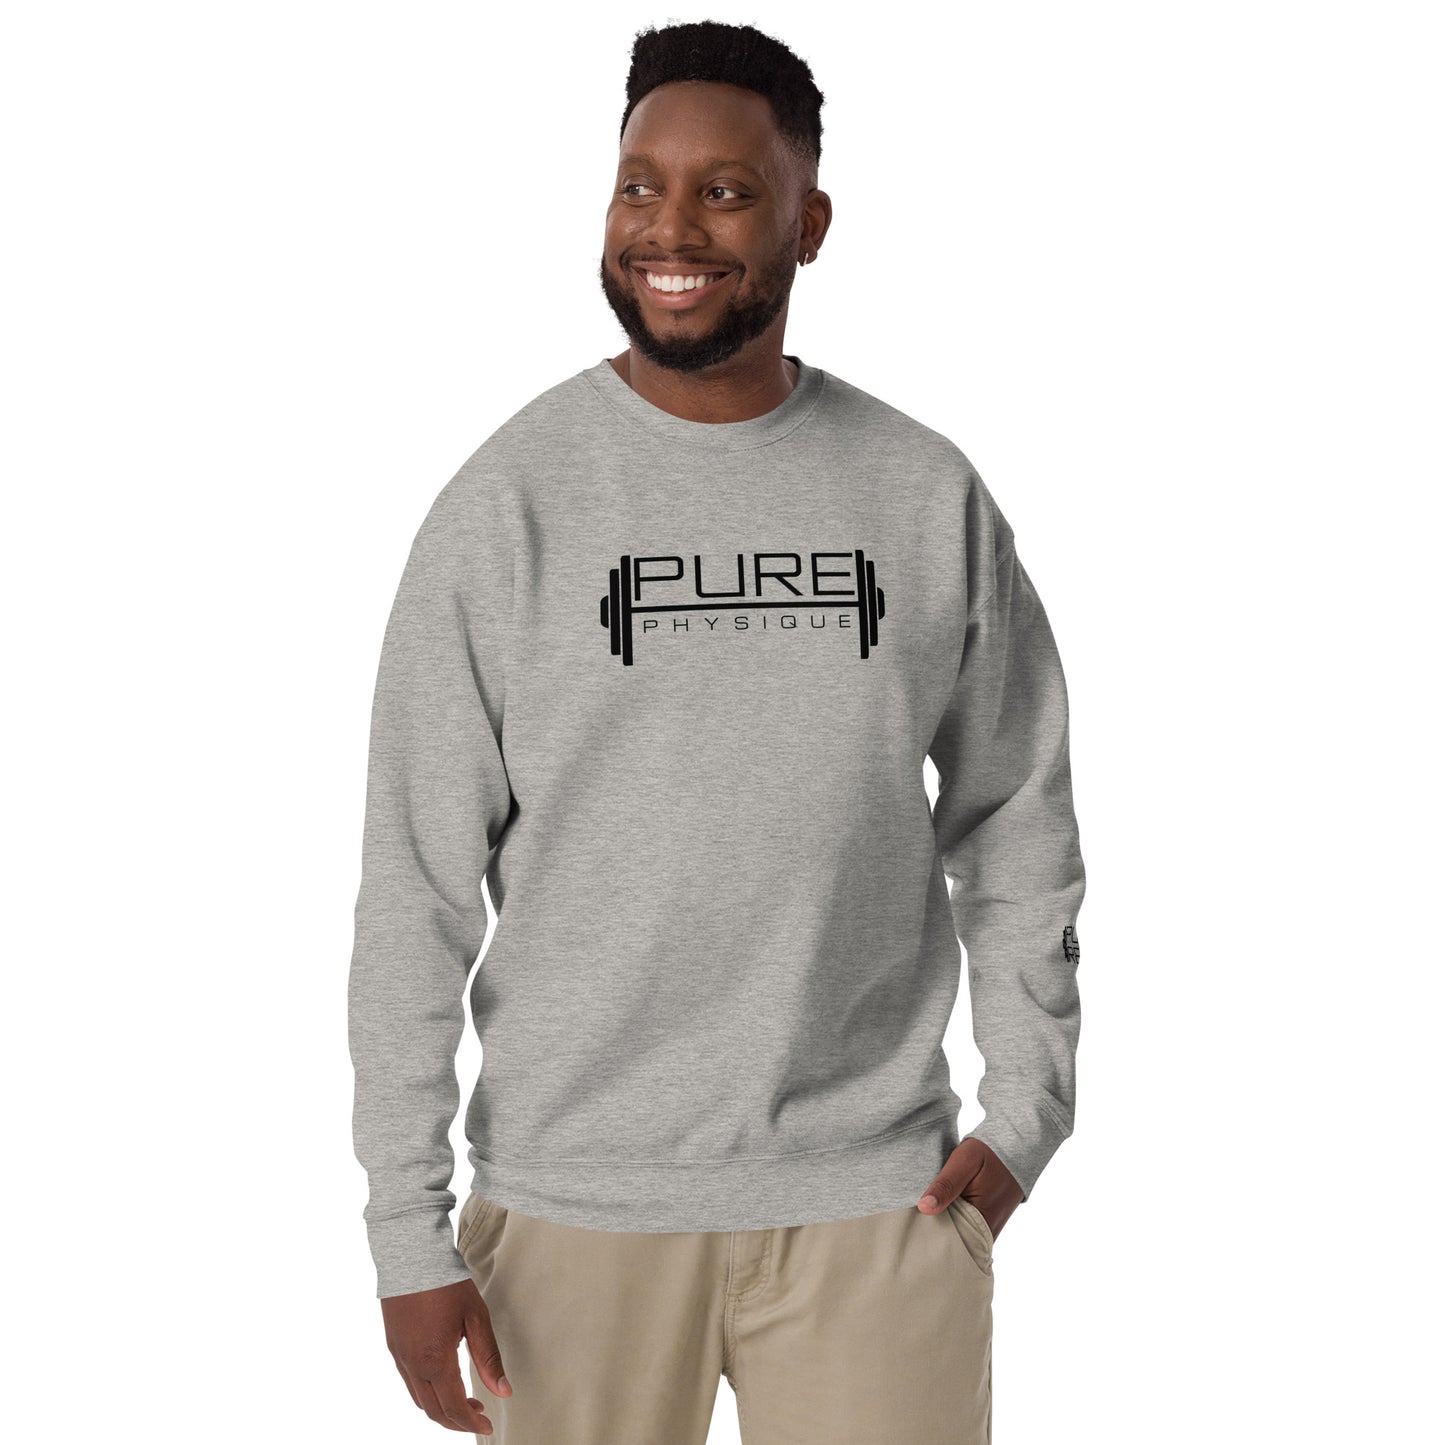 "PURE PHYSIQUE" Unisex Sweatshirt